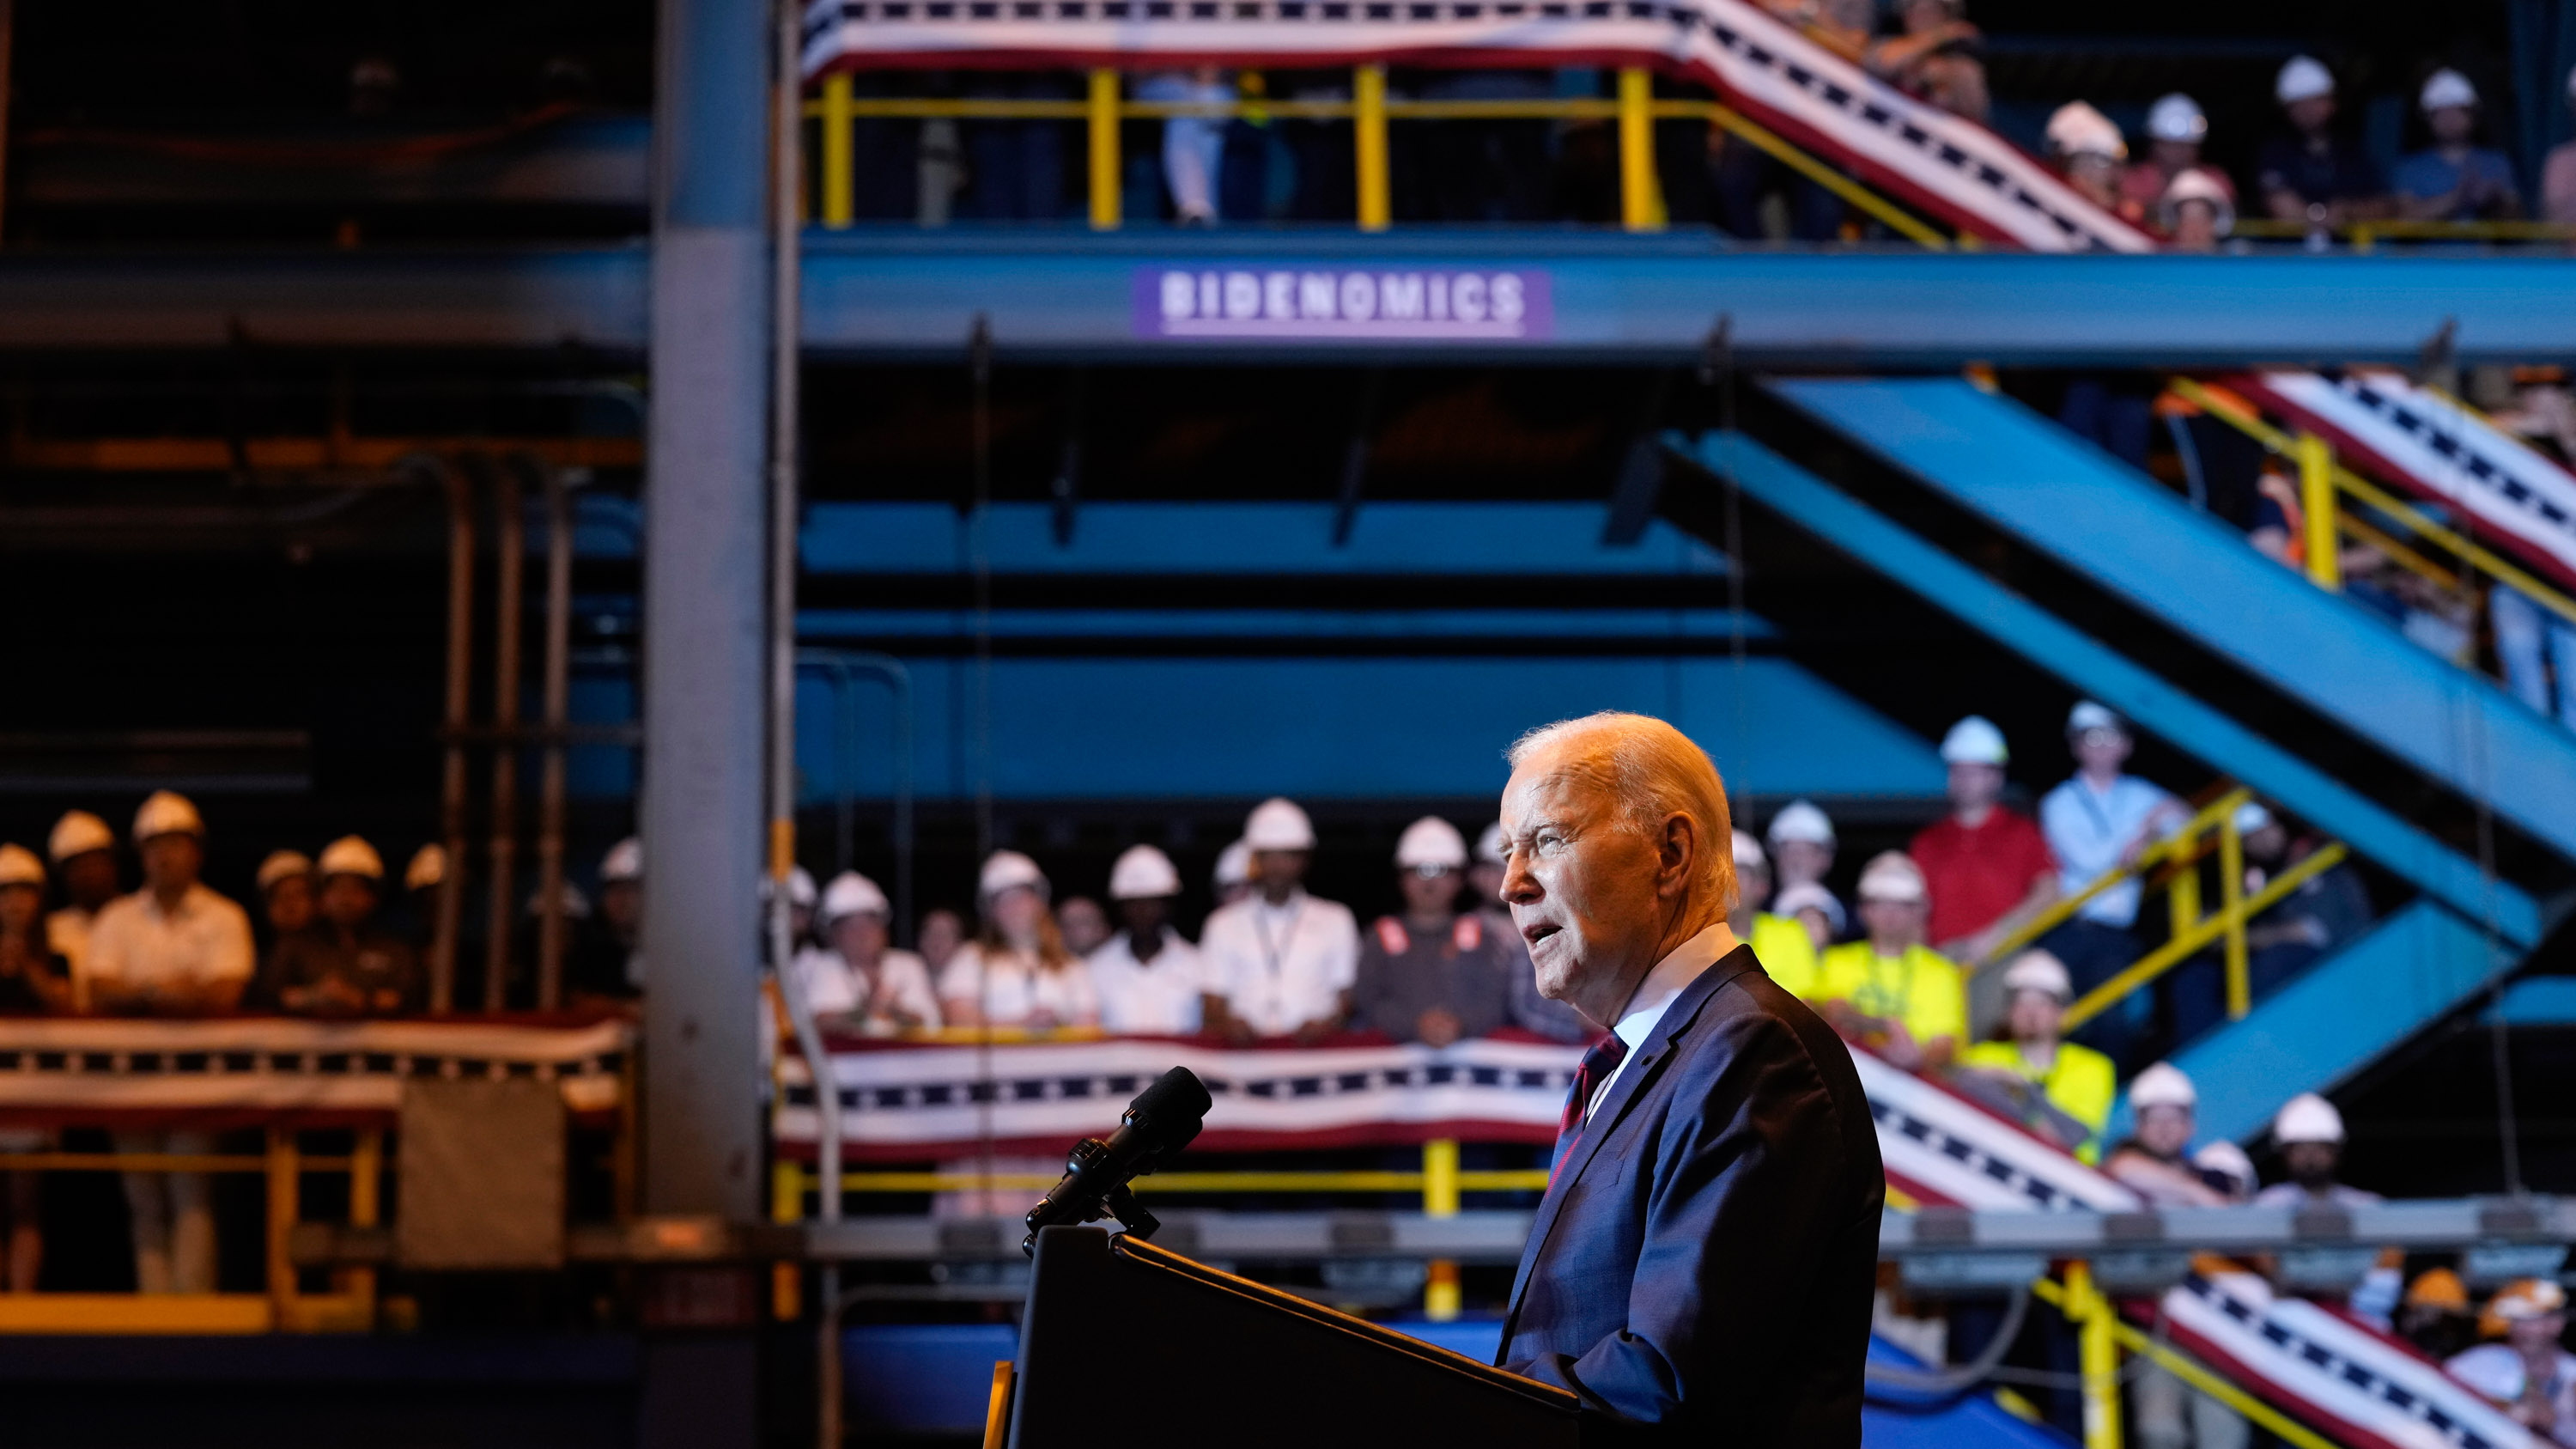 President Joe Biden speaks at a shipyard in Philadelphia with workers in hardhats in the audience